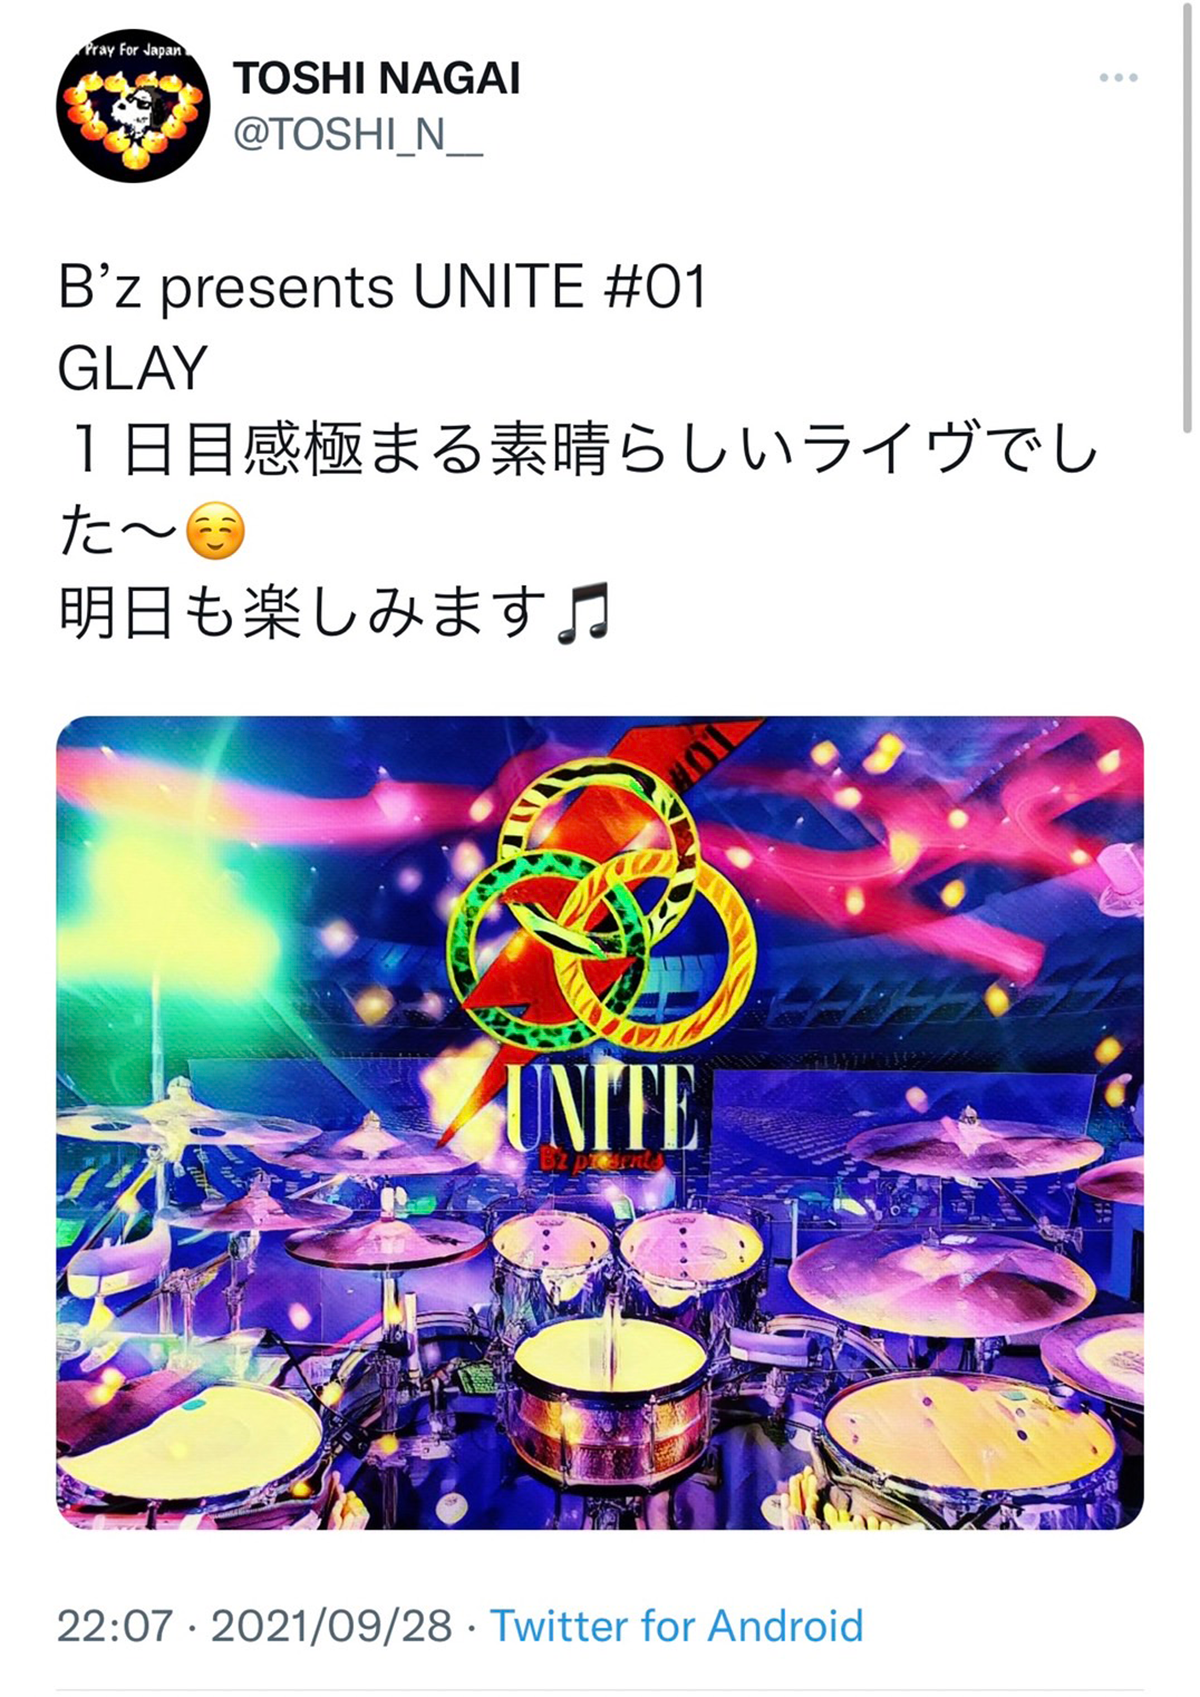 Toshi Nagaiが投稿した『B'z presents UNITE #01』のドラムセットの写真